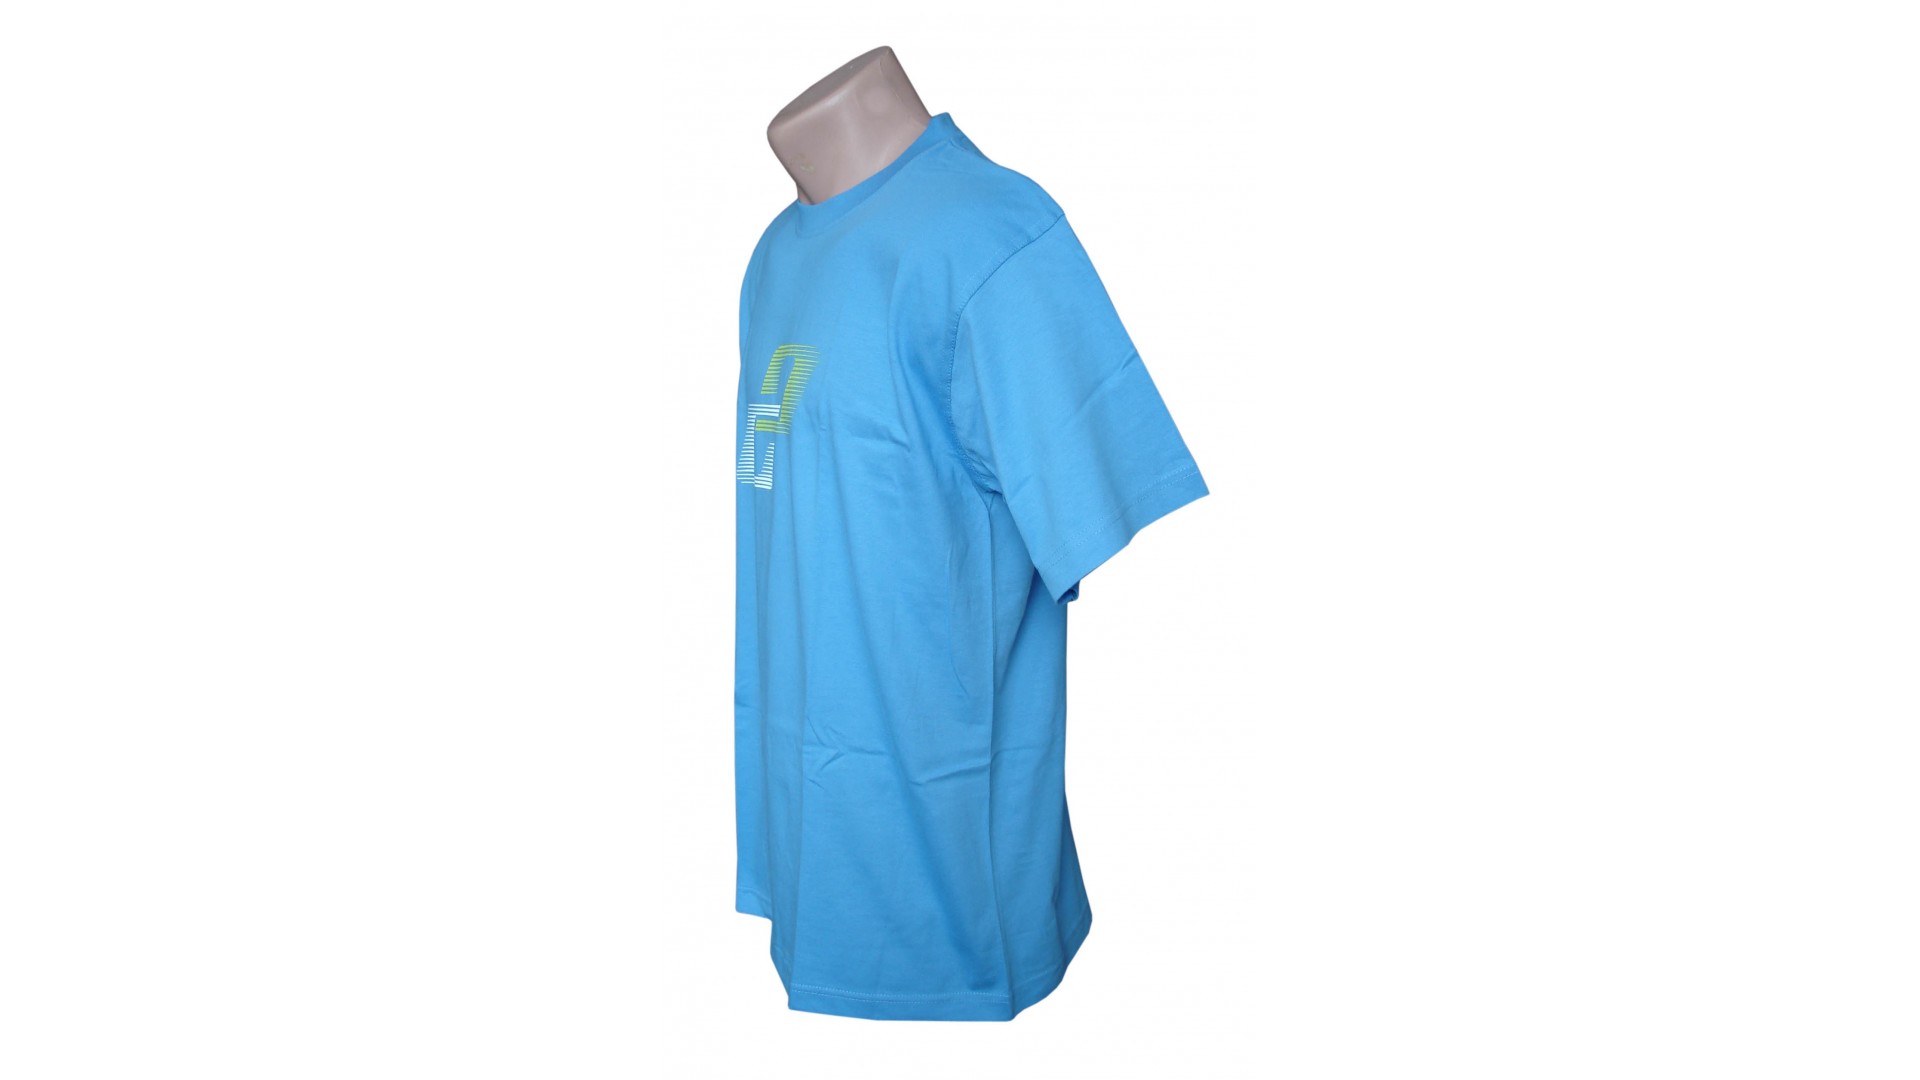 Футболка Ghost T-shirt blue год 2015 вид сбоку